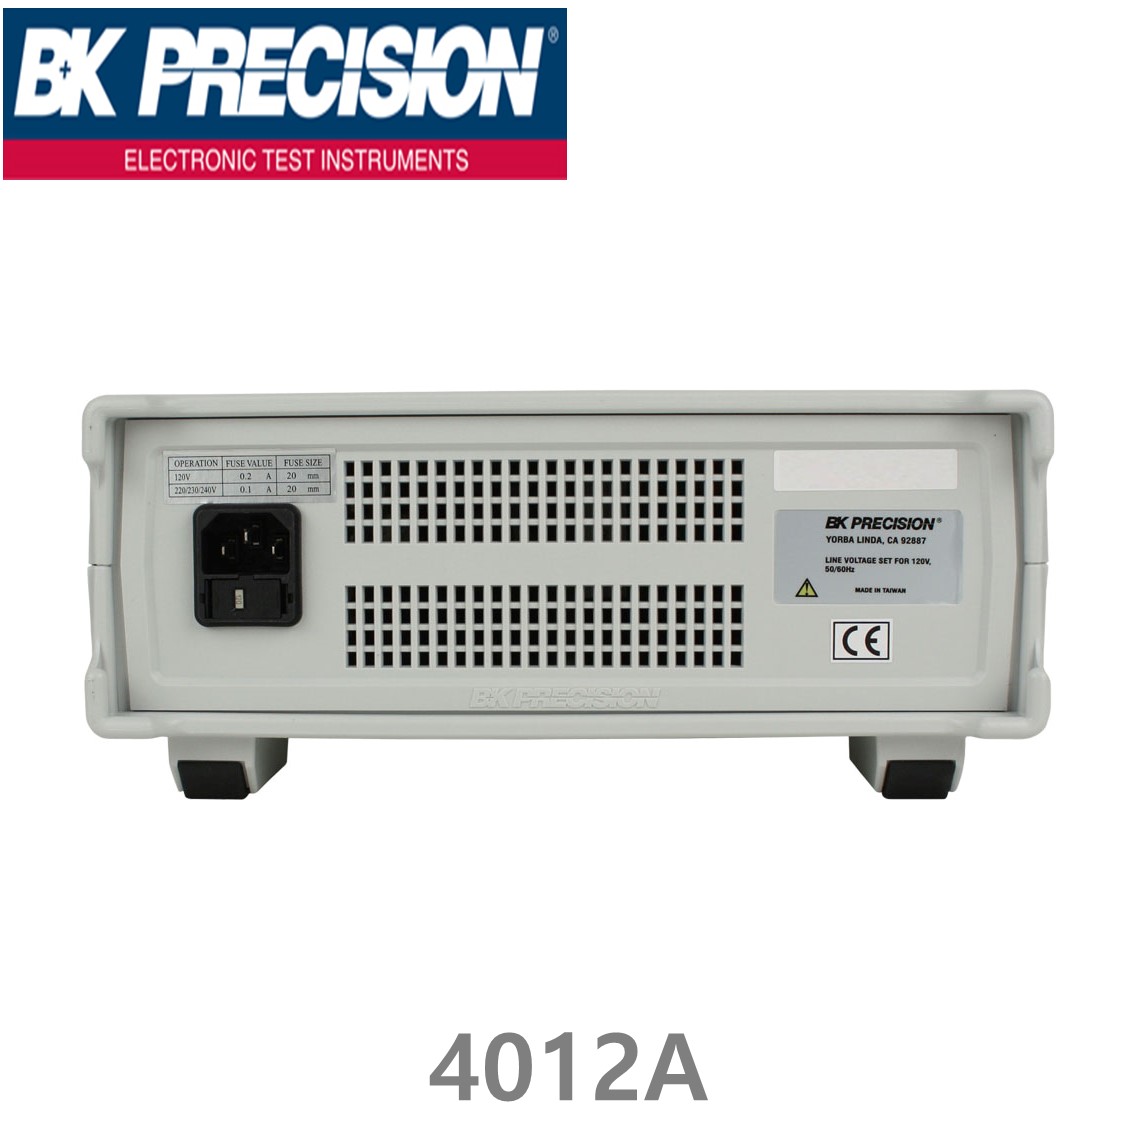 [ BK PRECISION ] BK 4012A, 5MHz, Sweep Function Generator, 스윕 펑션제너레이터, 함수발생기, B&K 4012A